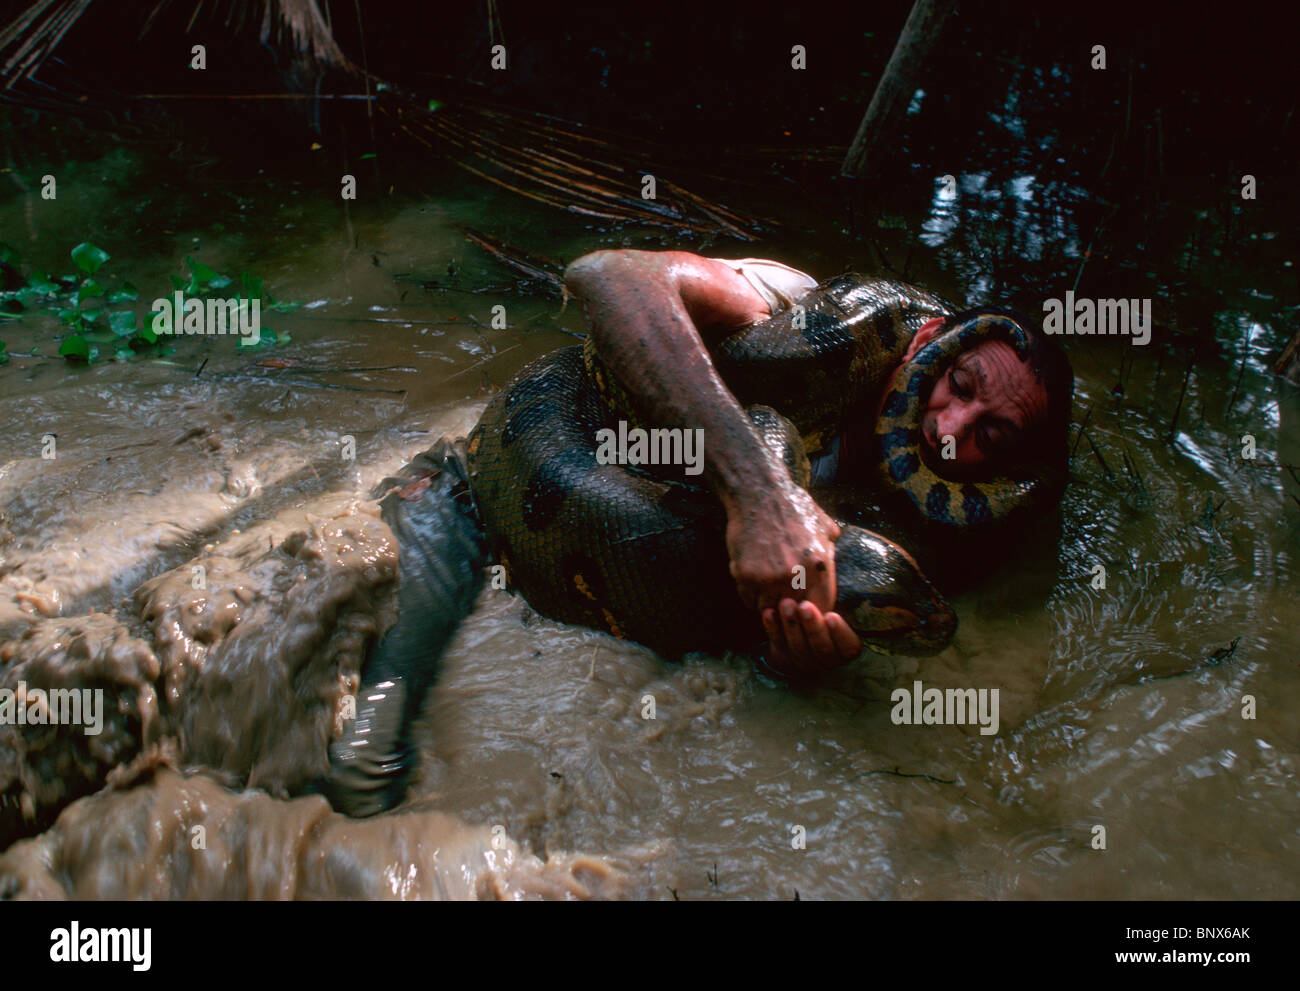 Man wrestles green anaconda in Amazonian swamp. Stock Photo